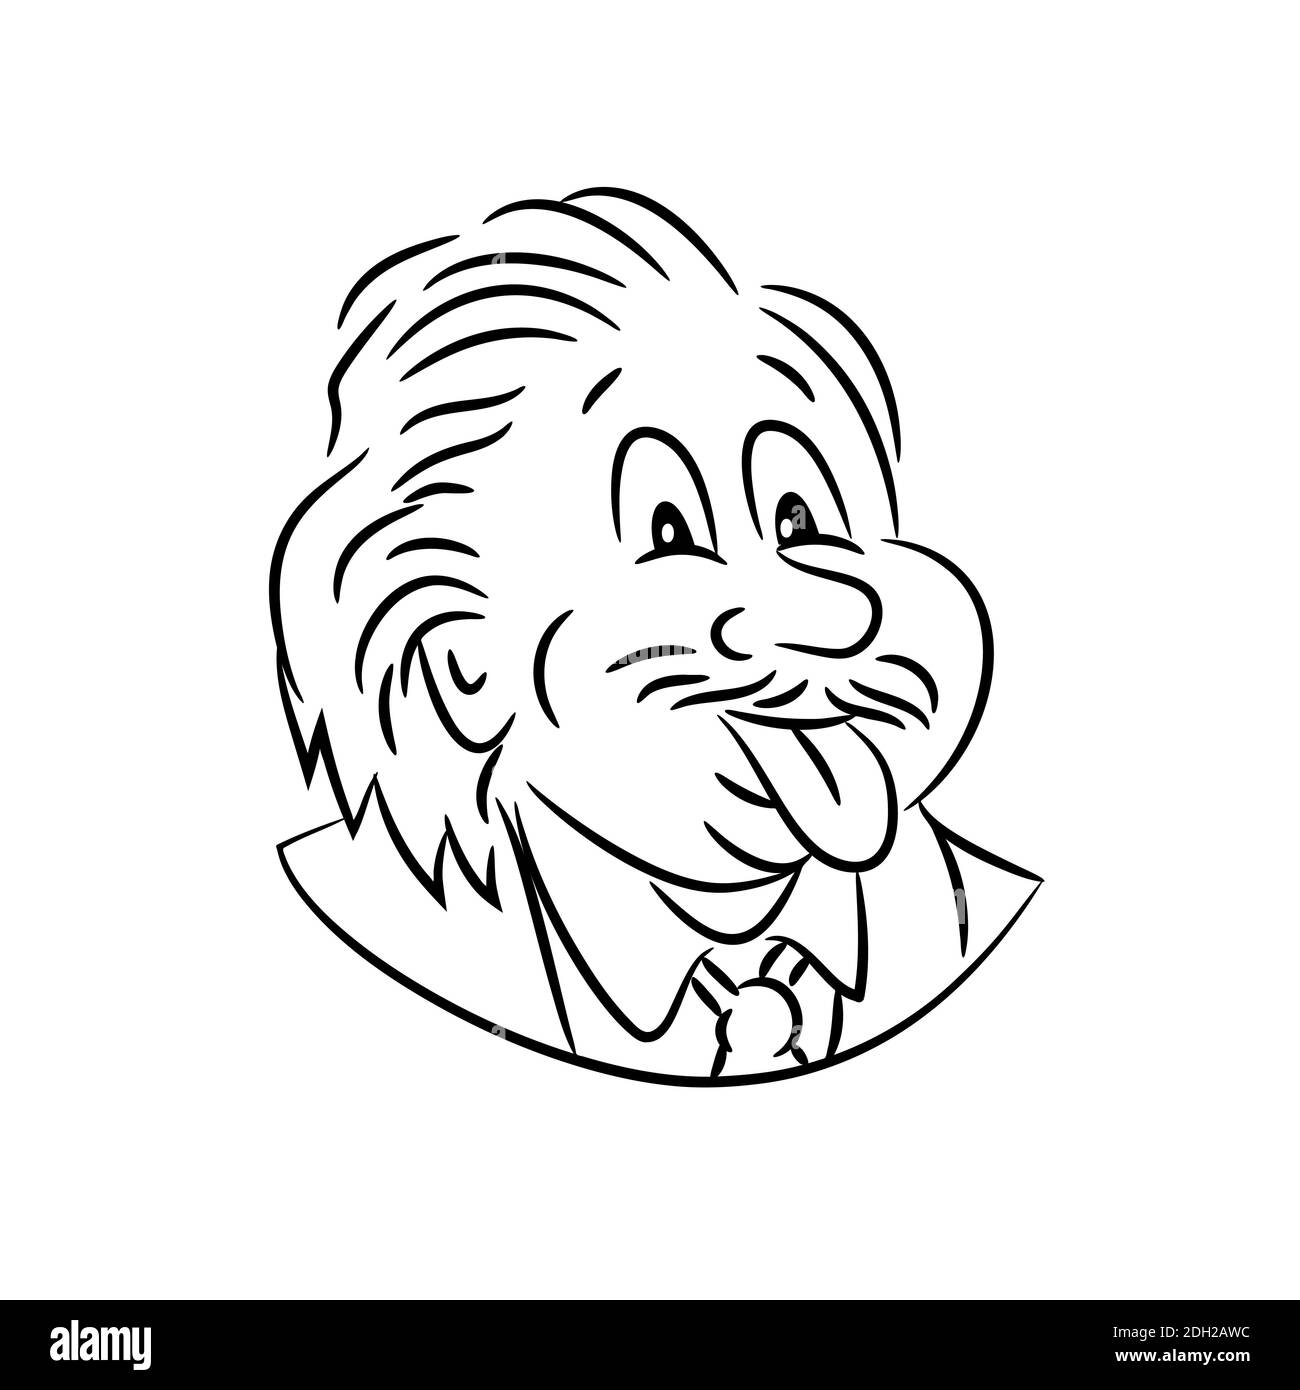 Albert Einstein Sticking Tongue Out Cartoon Black and White Stock Photo